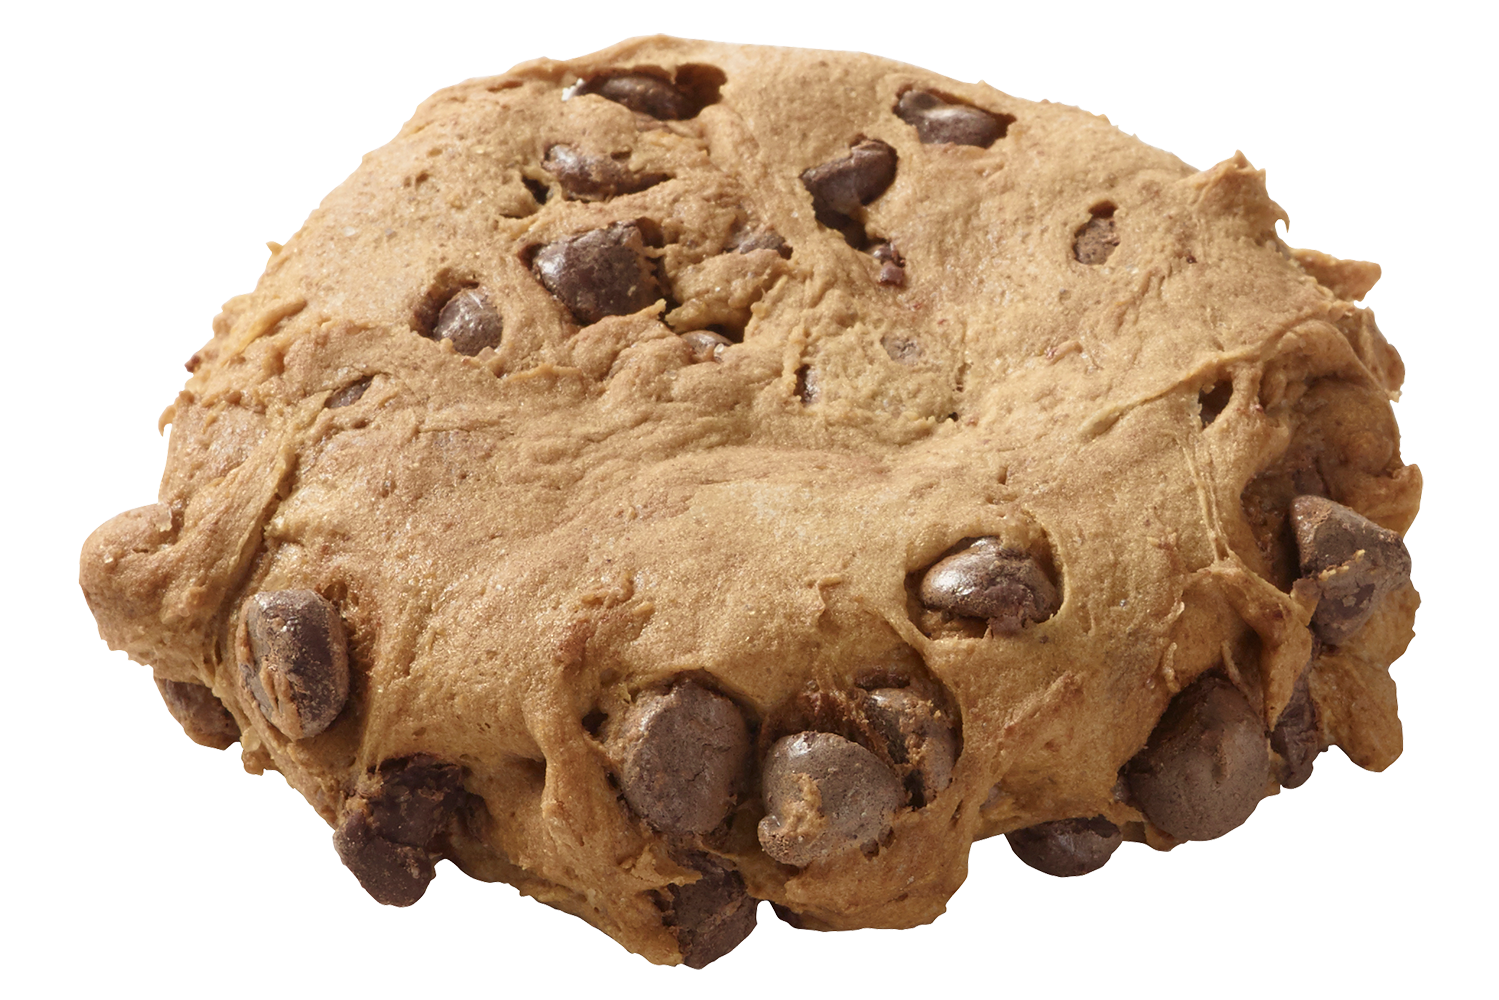 Gluten-Free Vegan Chocolate Chip Cookie